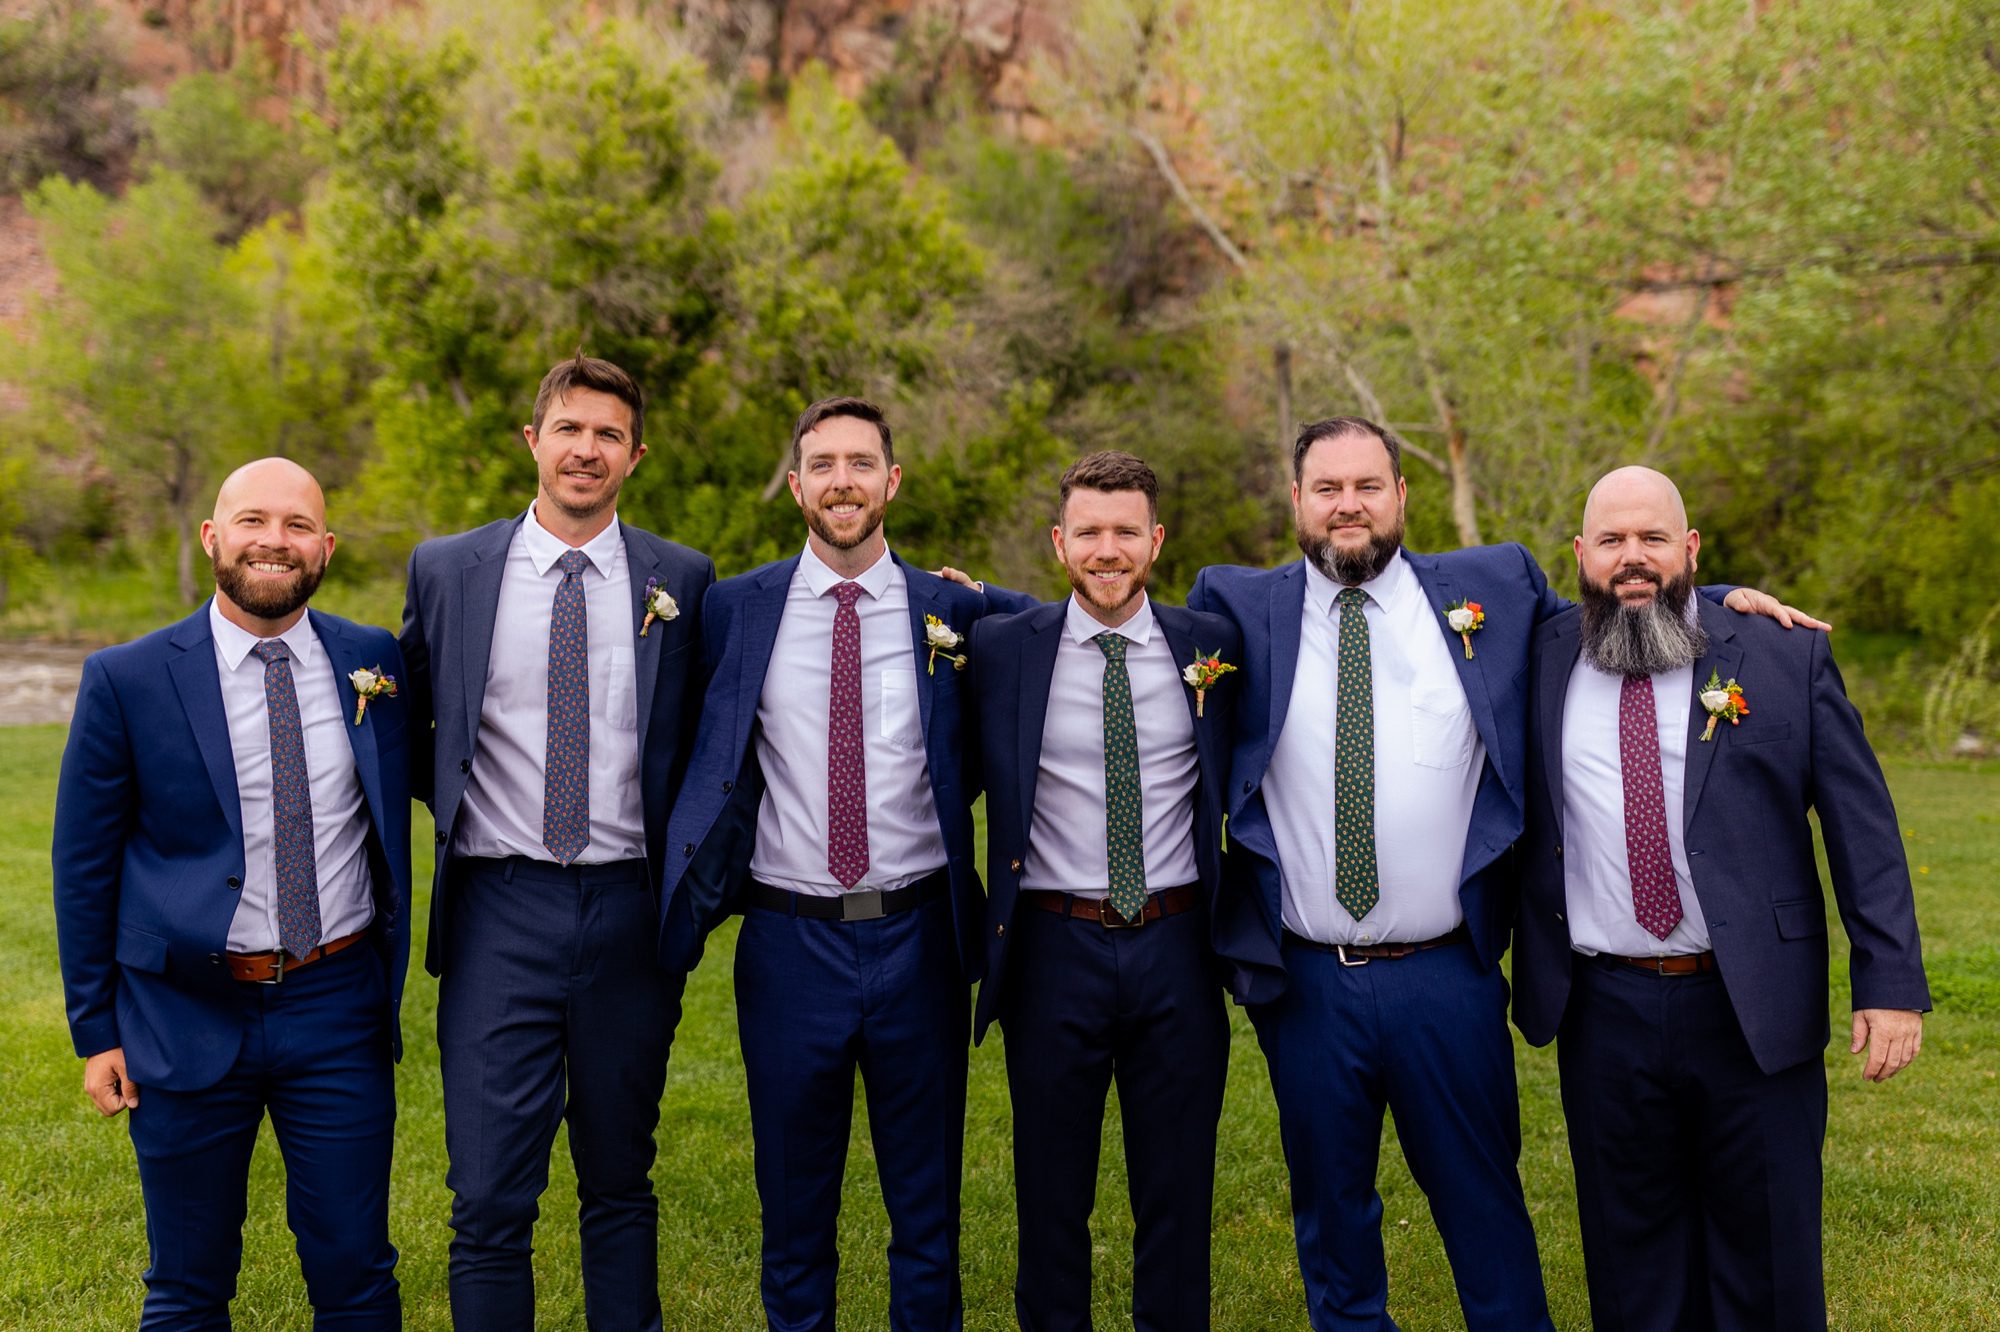 Planet Bluegrass Wedding venue in Lyons Colorado: Colorado Wedding Photographer, Groomsmen Photos, Groomsmen suits, Bridal party photos